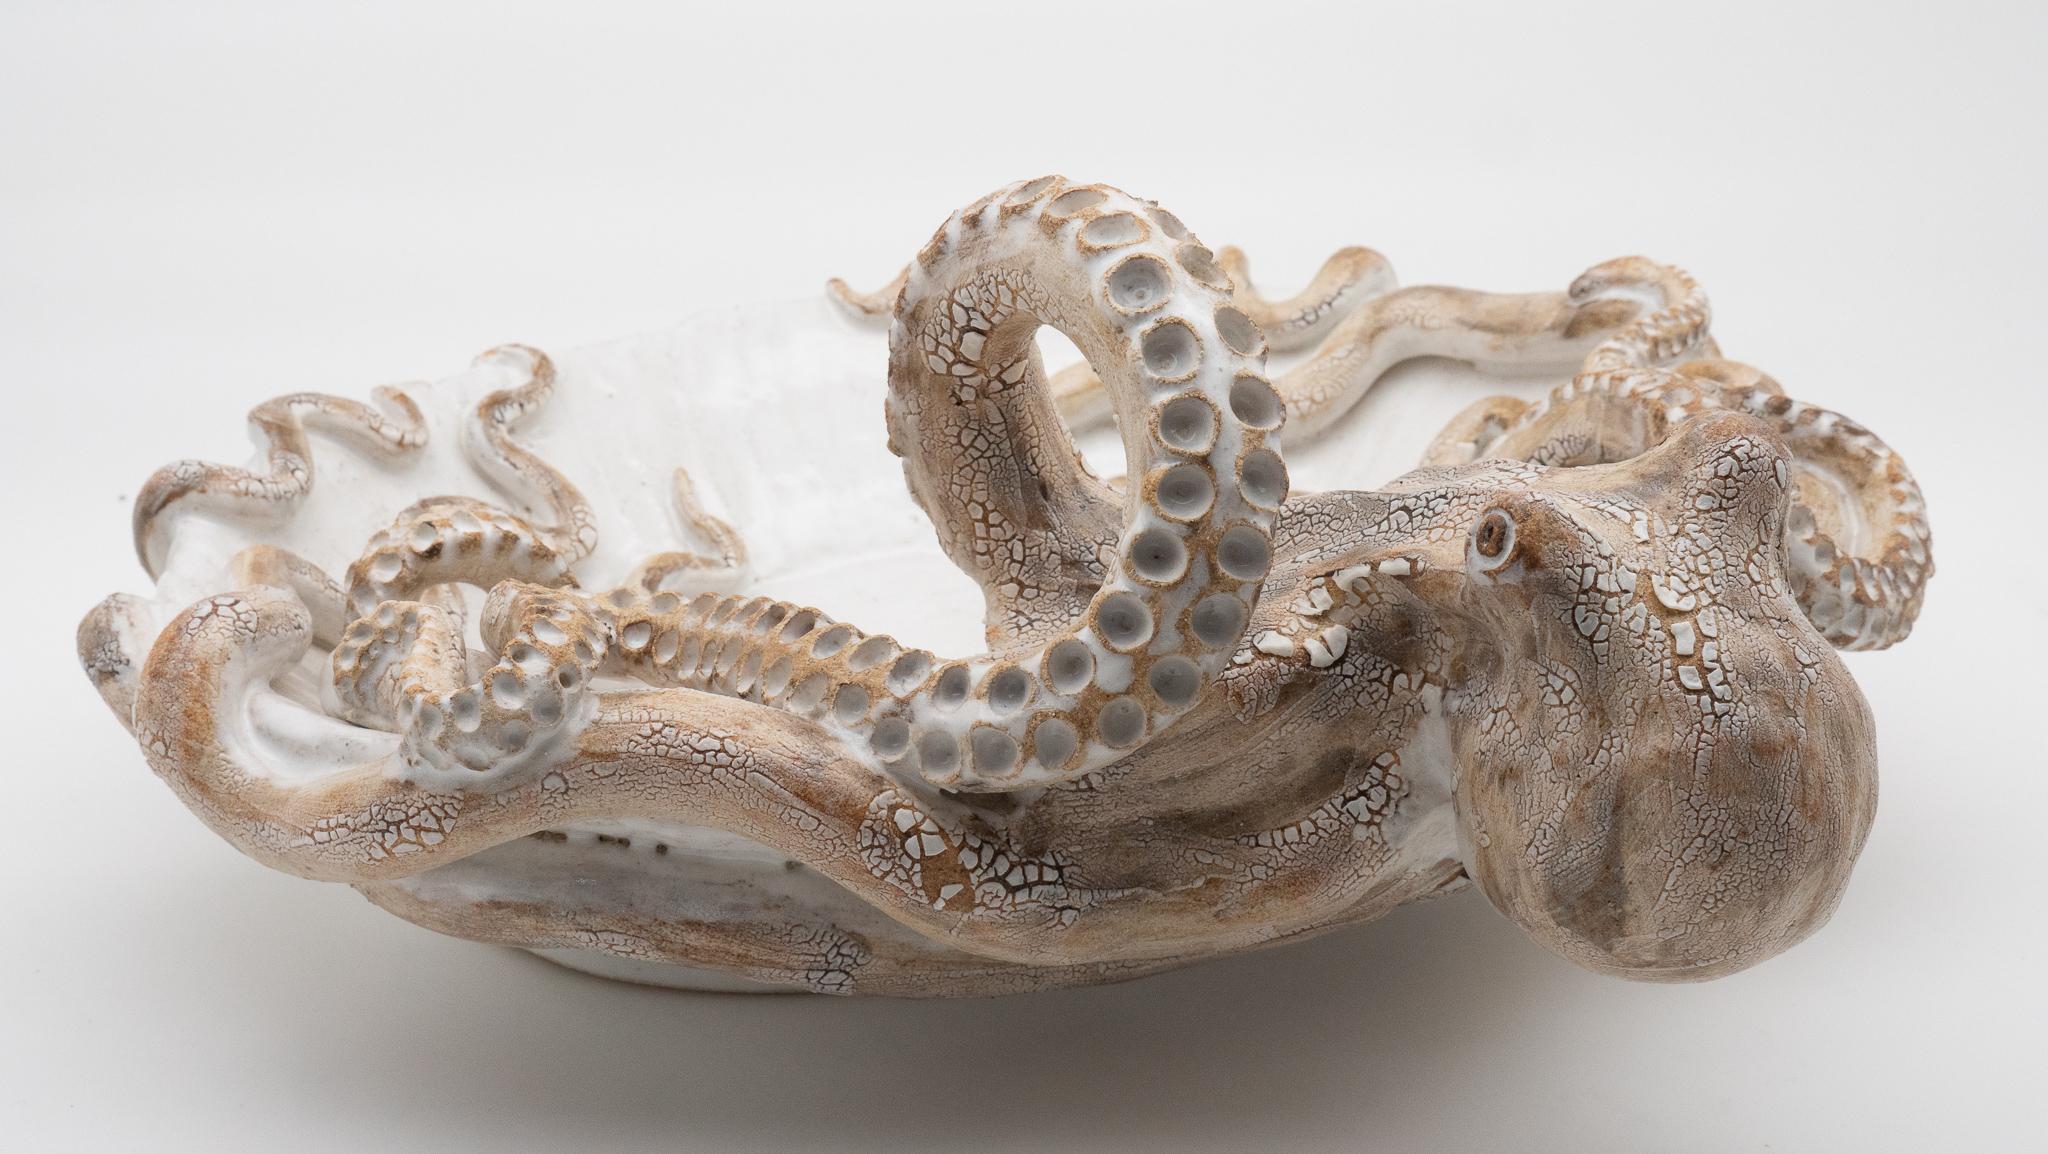 Handmade ceramic octopus serving platter, made in the U.S.